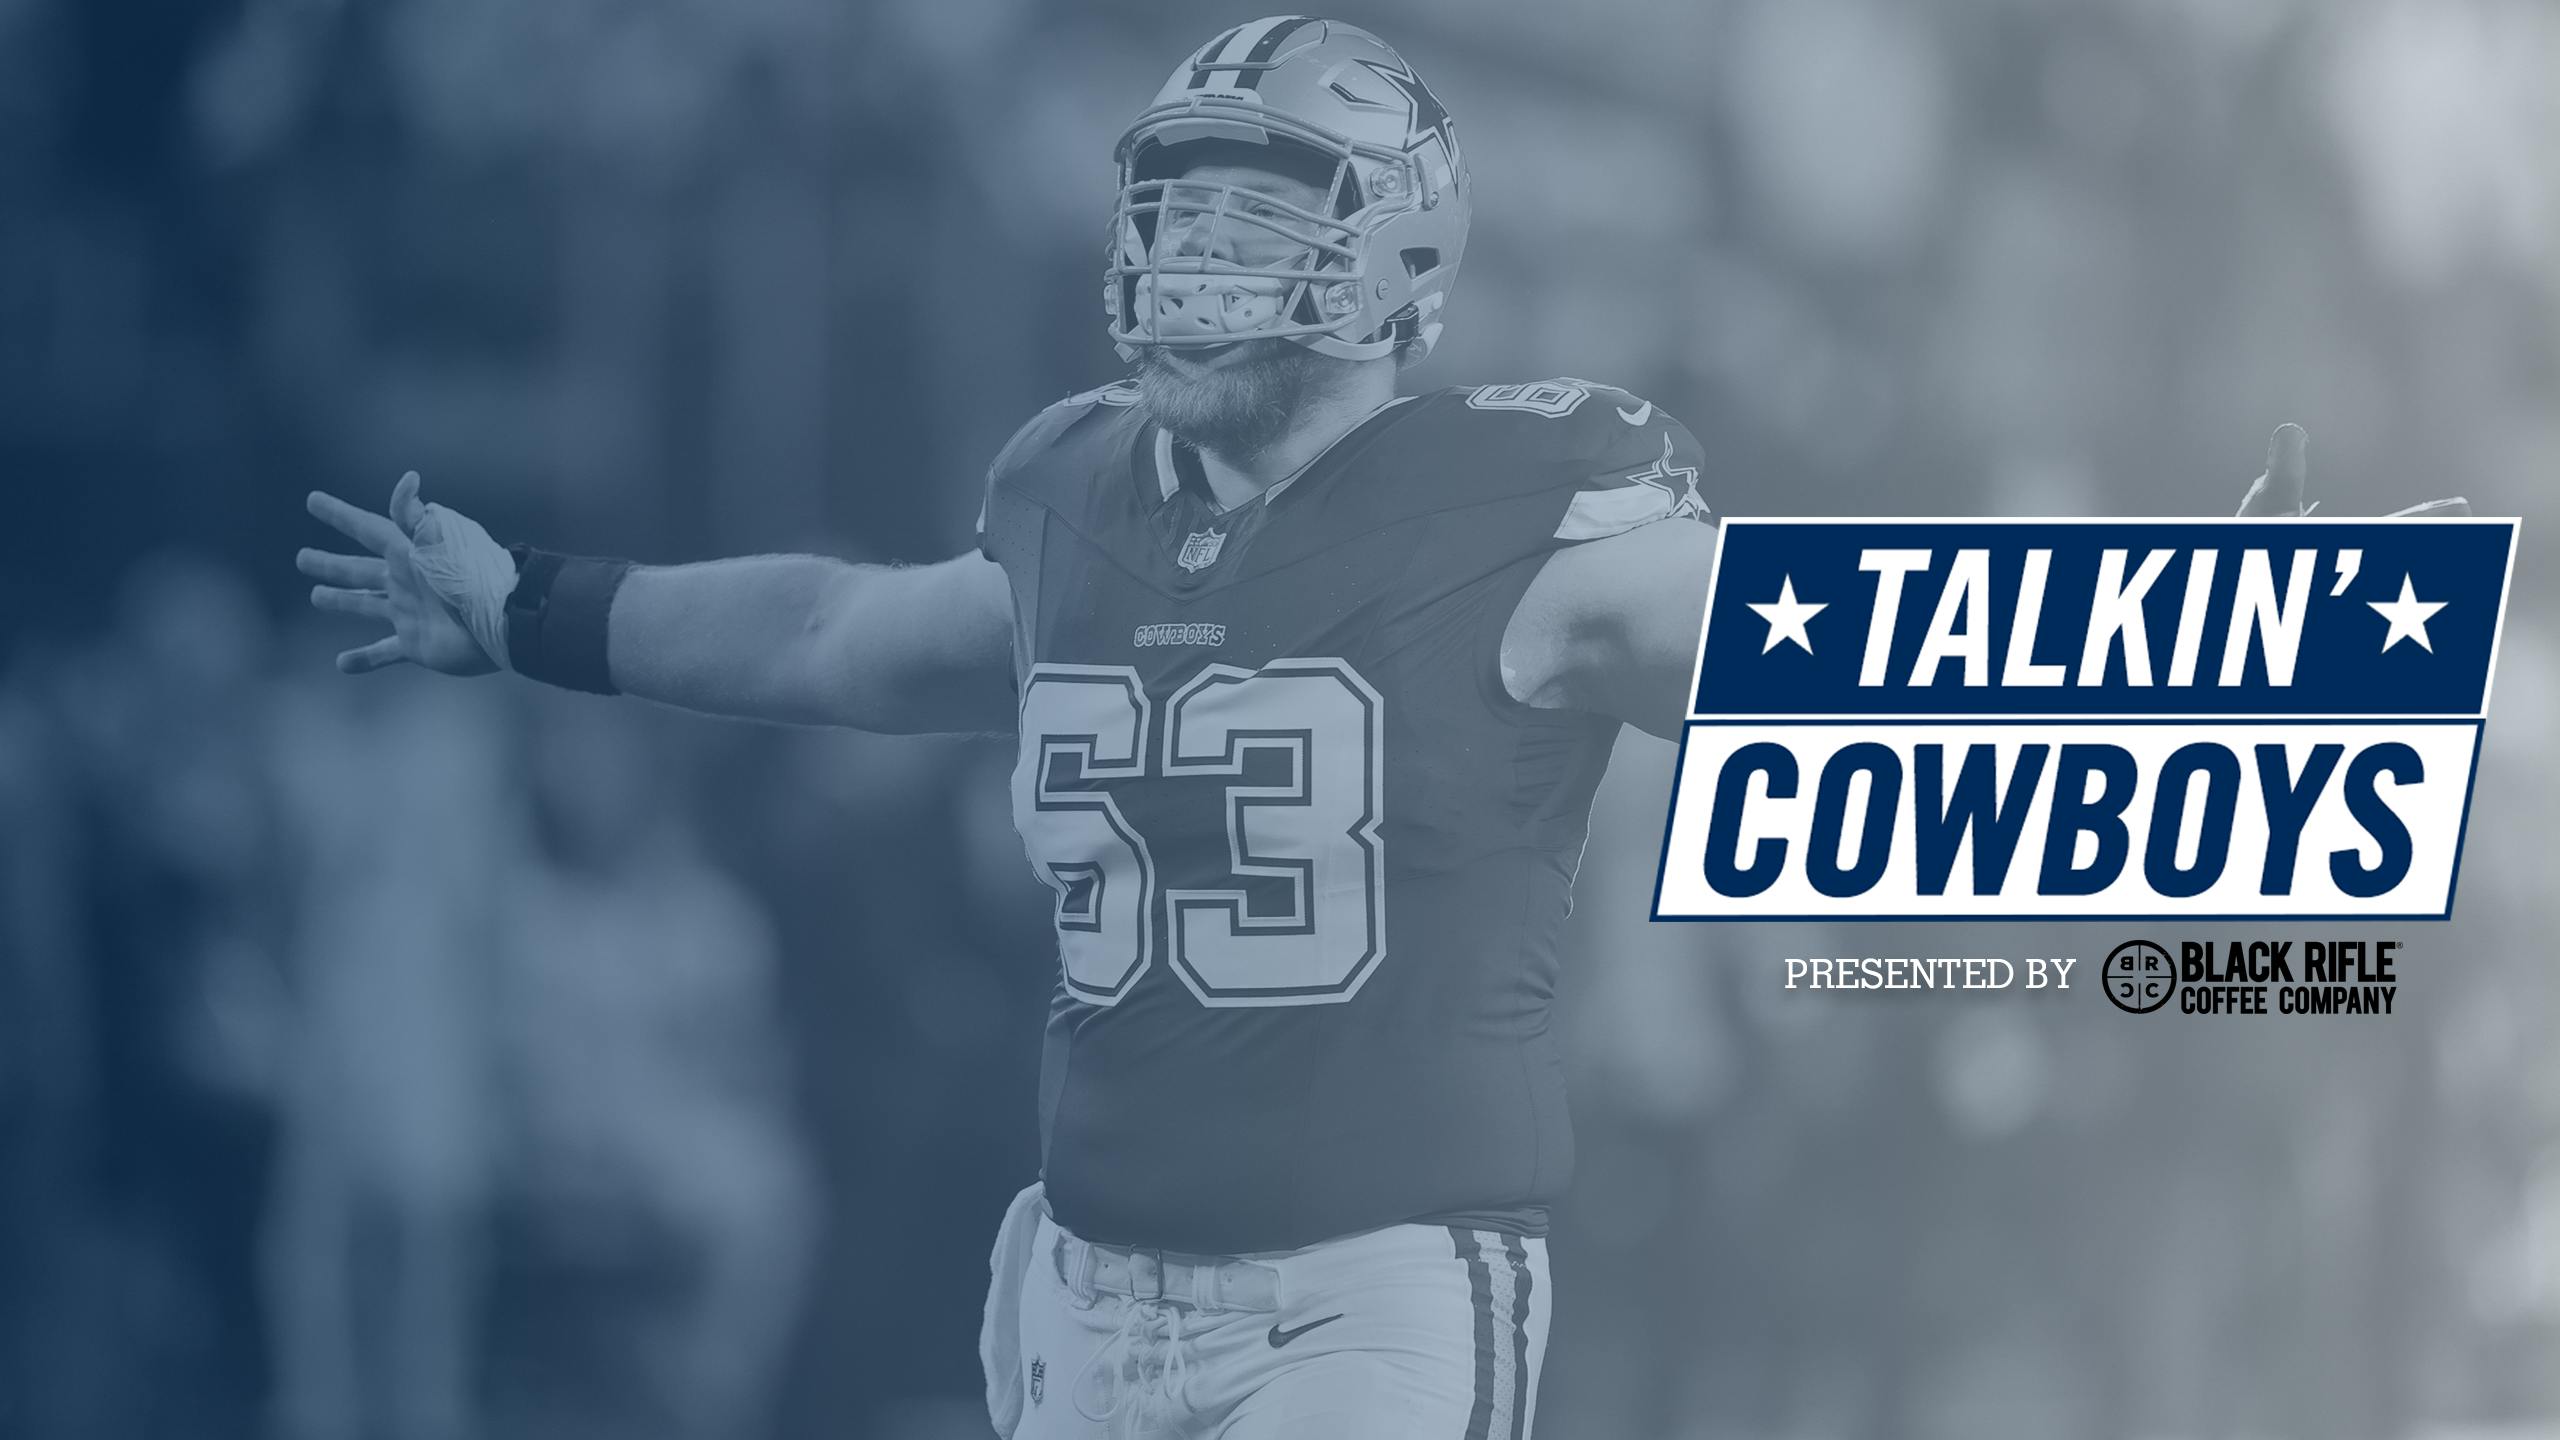 Talkin’ Cowboys: Getting Centered